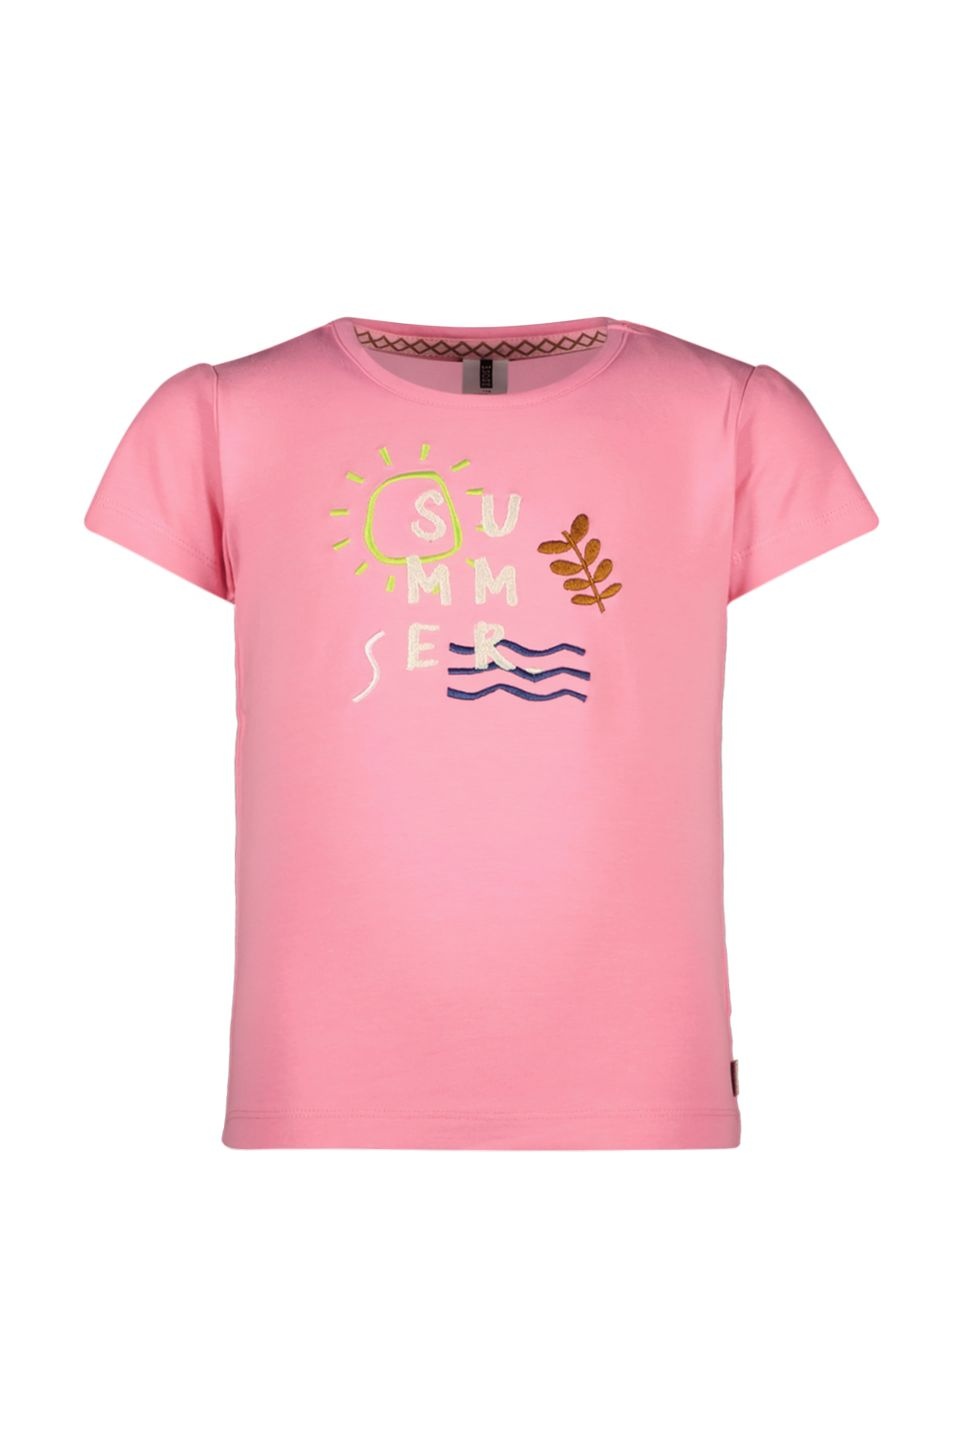 B. Nosy Y403-5472 Meisjes T-shirt - Sugar Pink - Maat 110